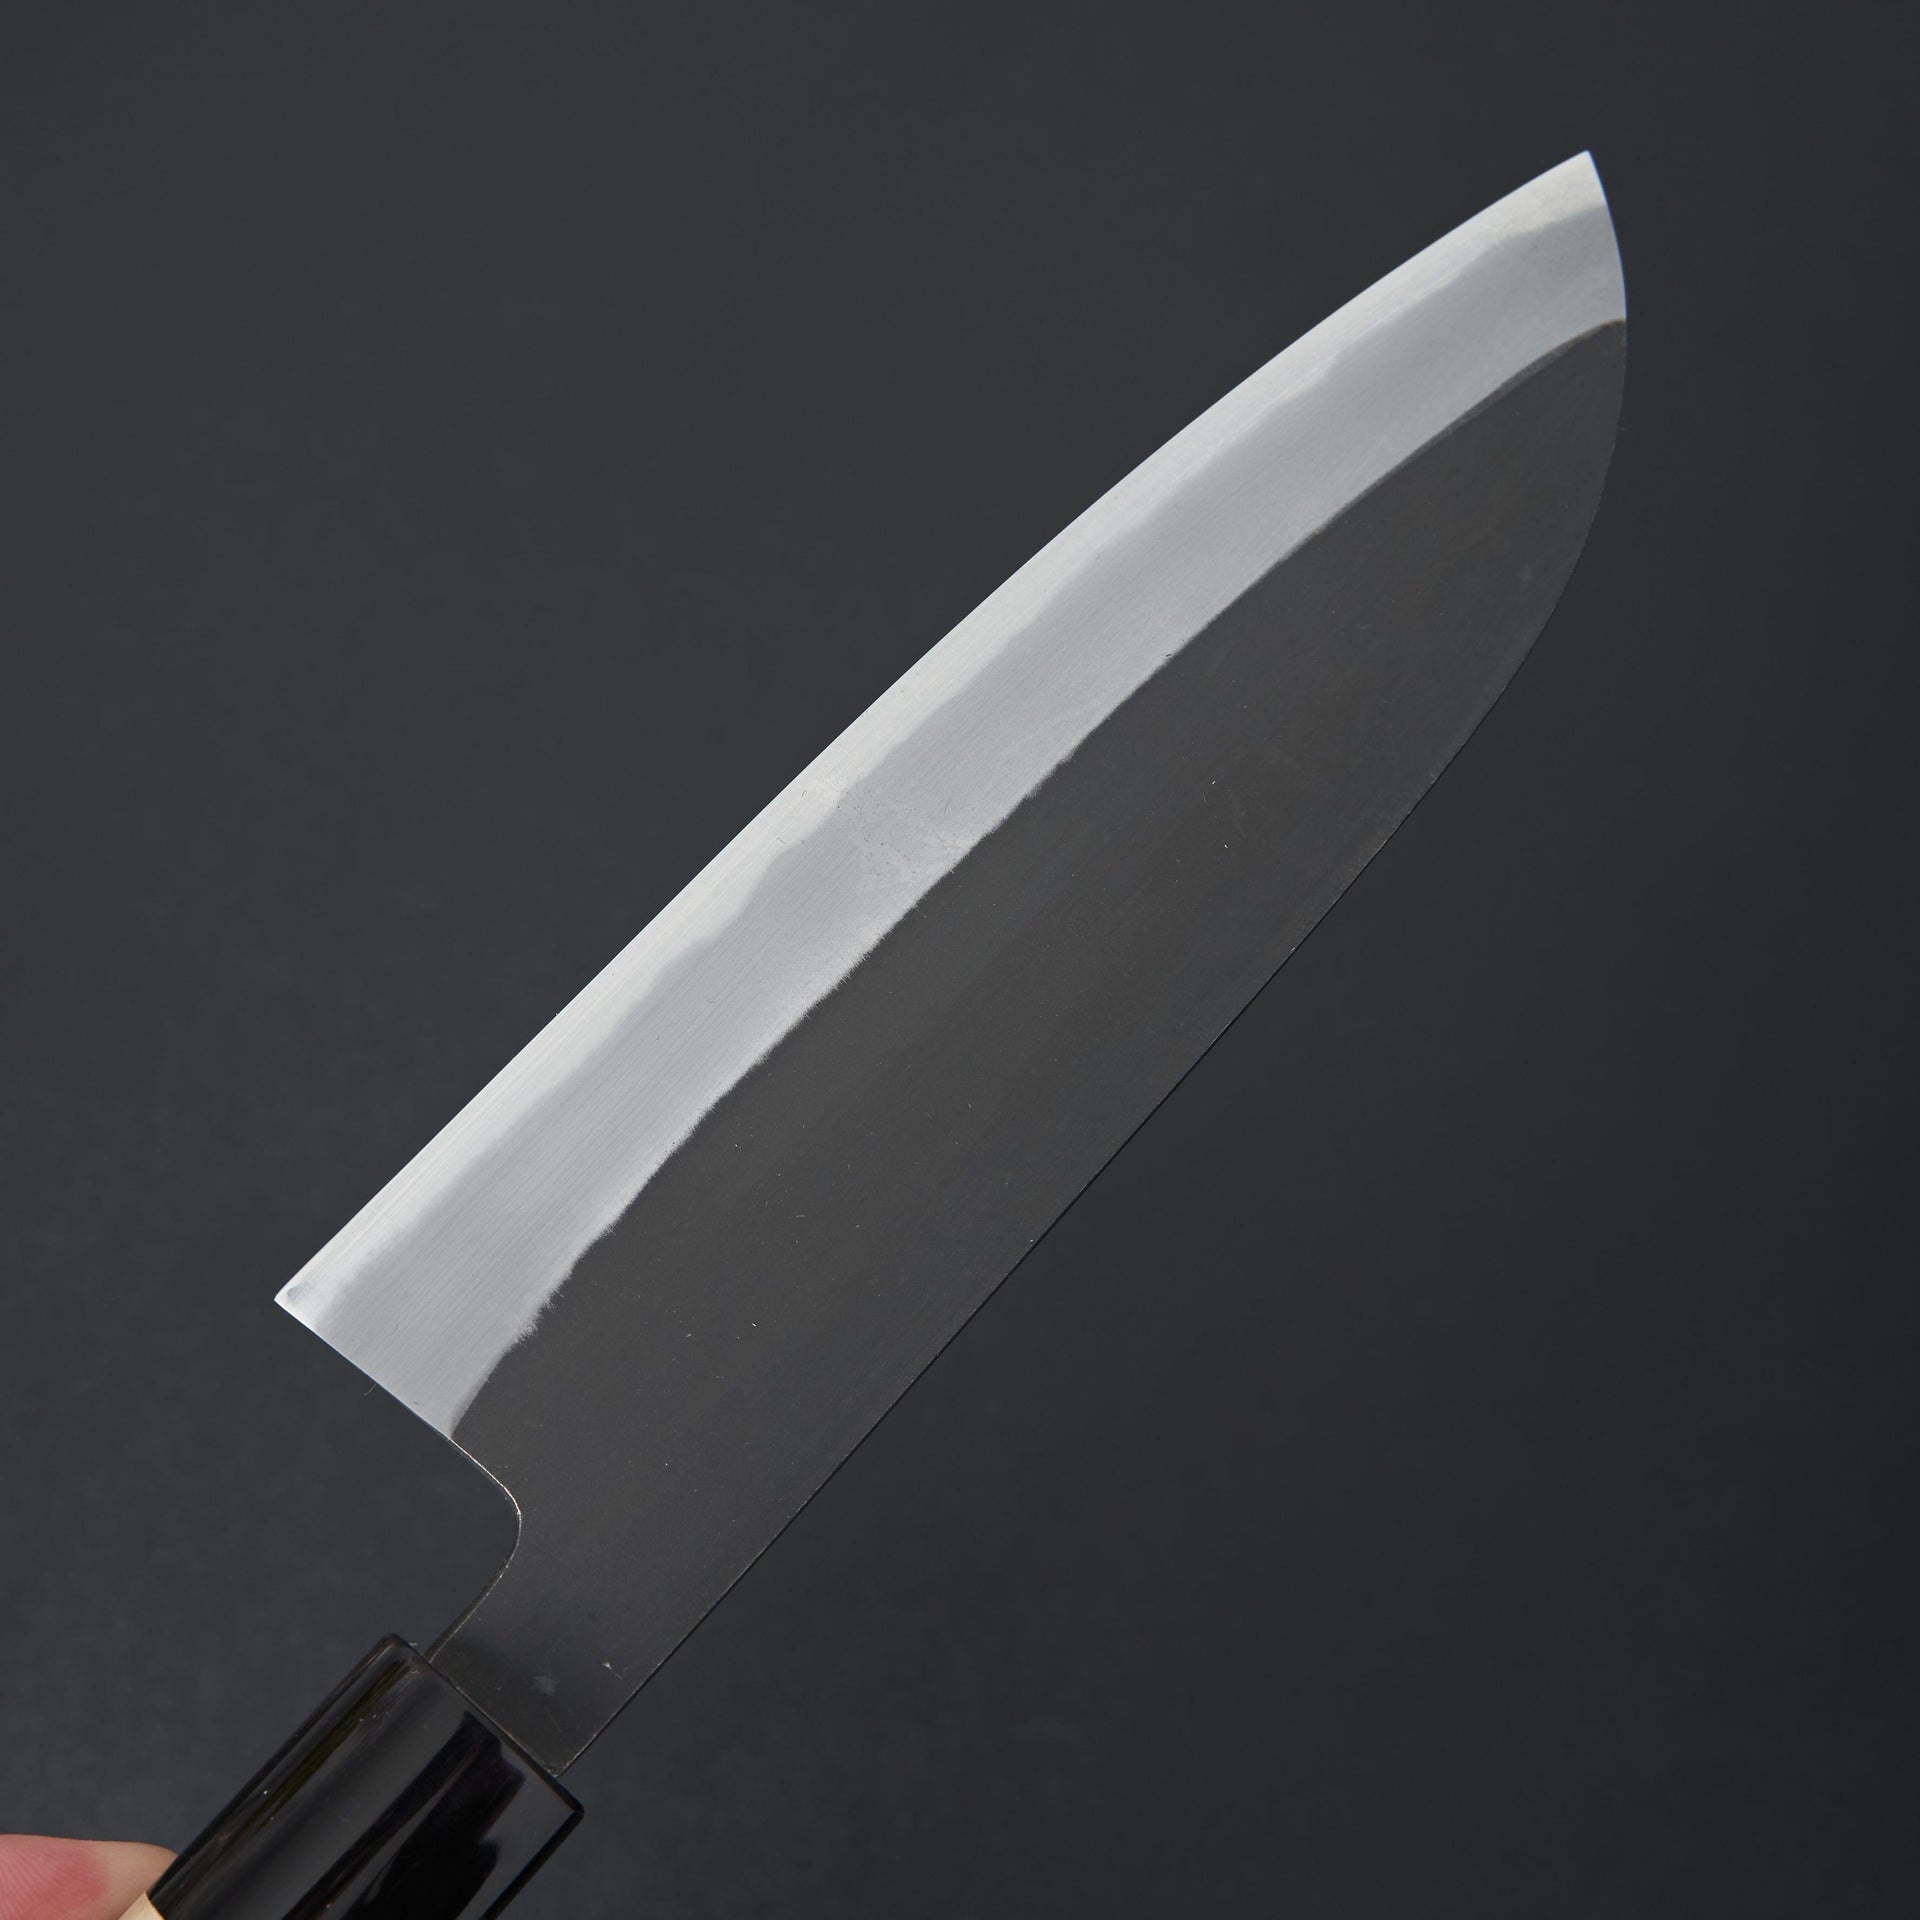 Hinoura Ajikataya Shirogami 2 Kurouchi Santoku 180mm-Knife-Hinoura-Carbon Knife Co